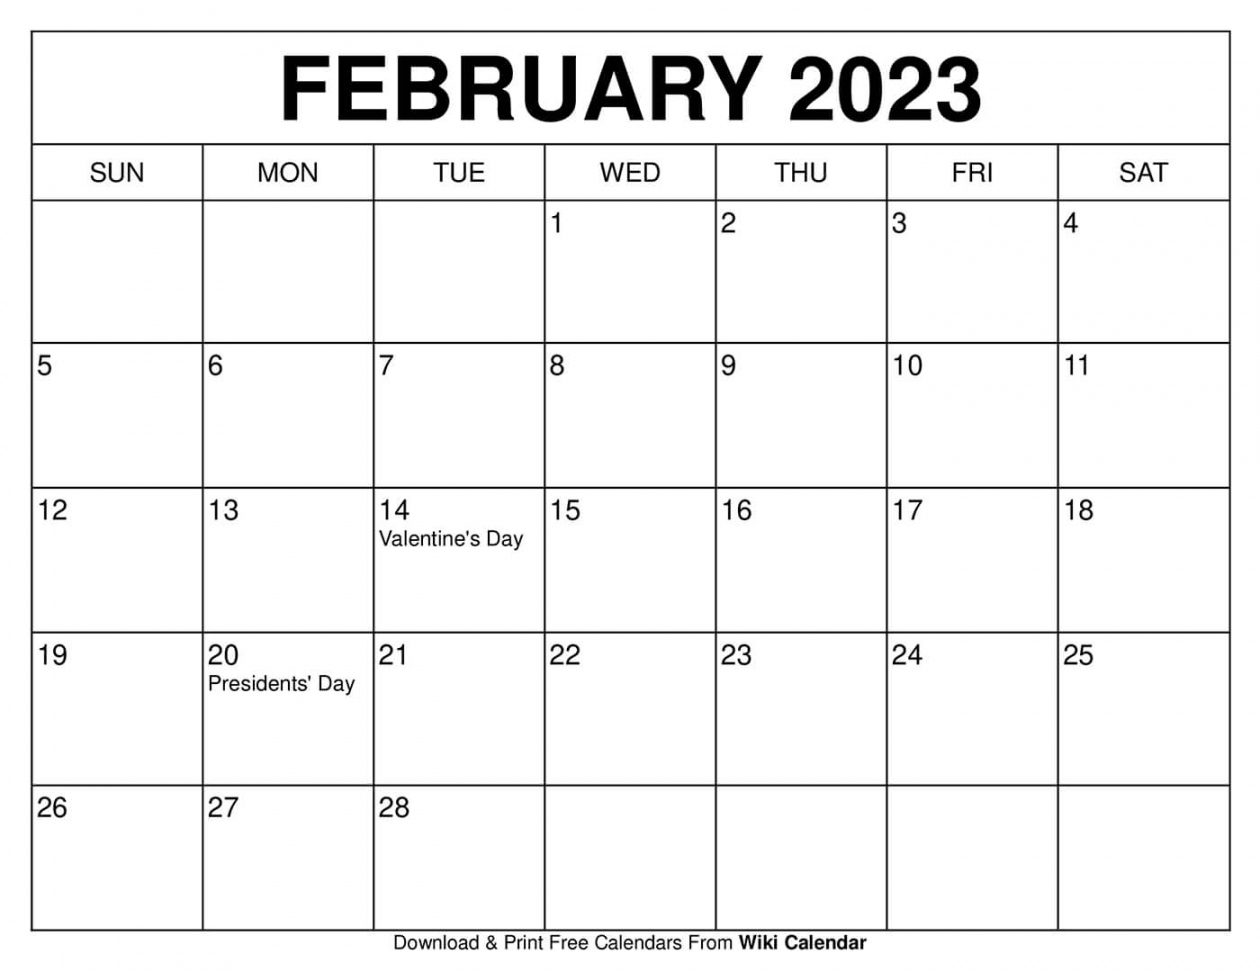 Free Printable February Calendar - Printable - Printable February  Calendar Templates with Holidays - Wiki